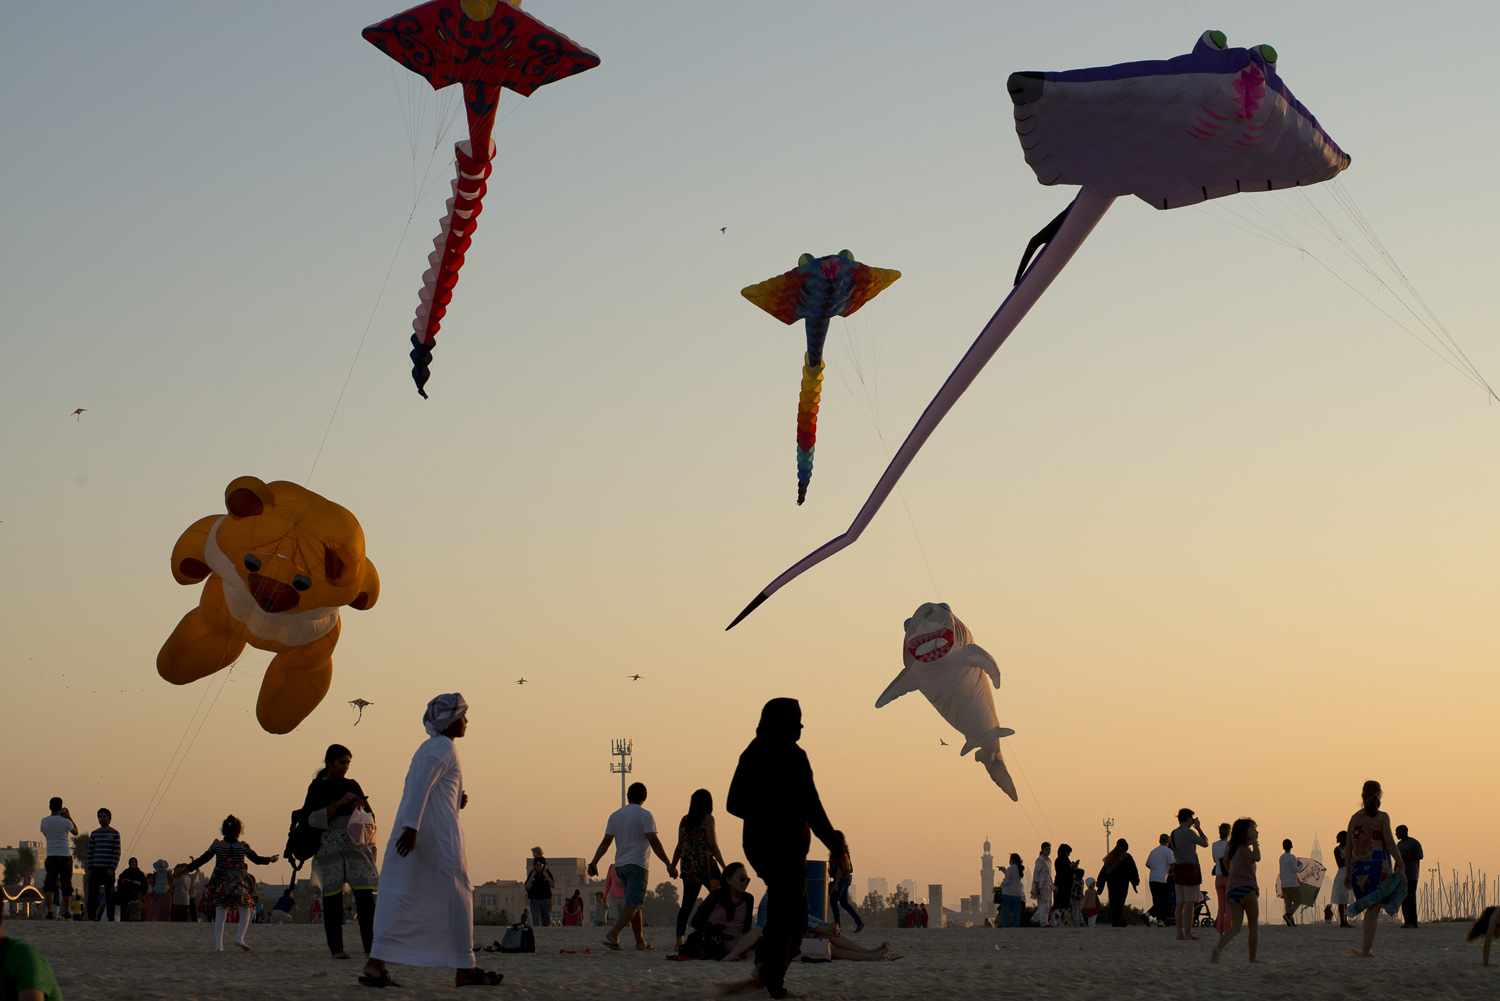 jo-kearney-video-photos-photography-travel-portraits-prints-for-sale-dubai-kites-emiratis.jpg